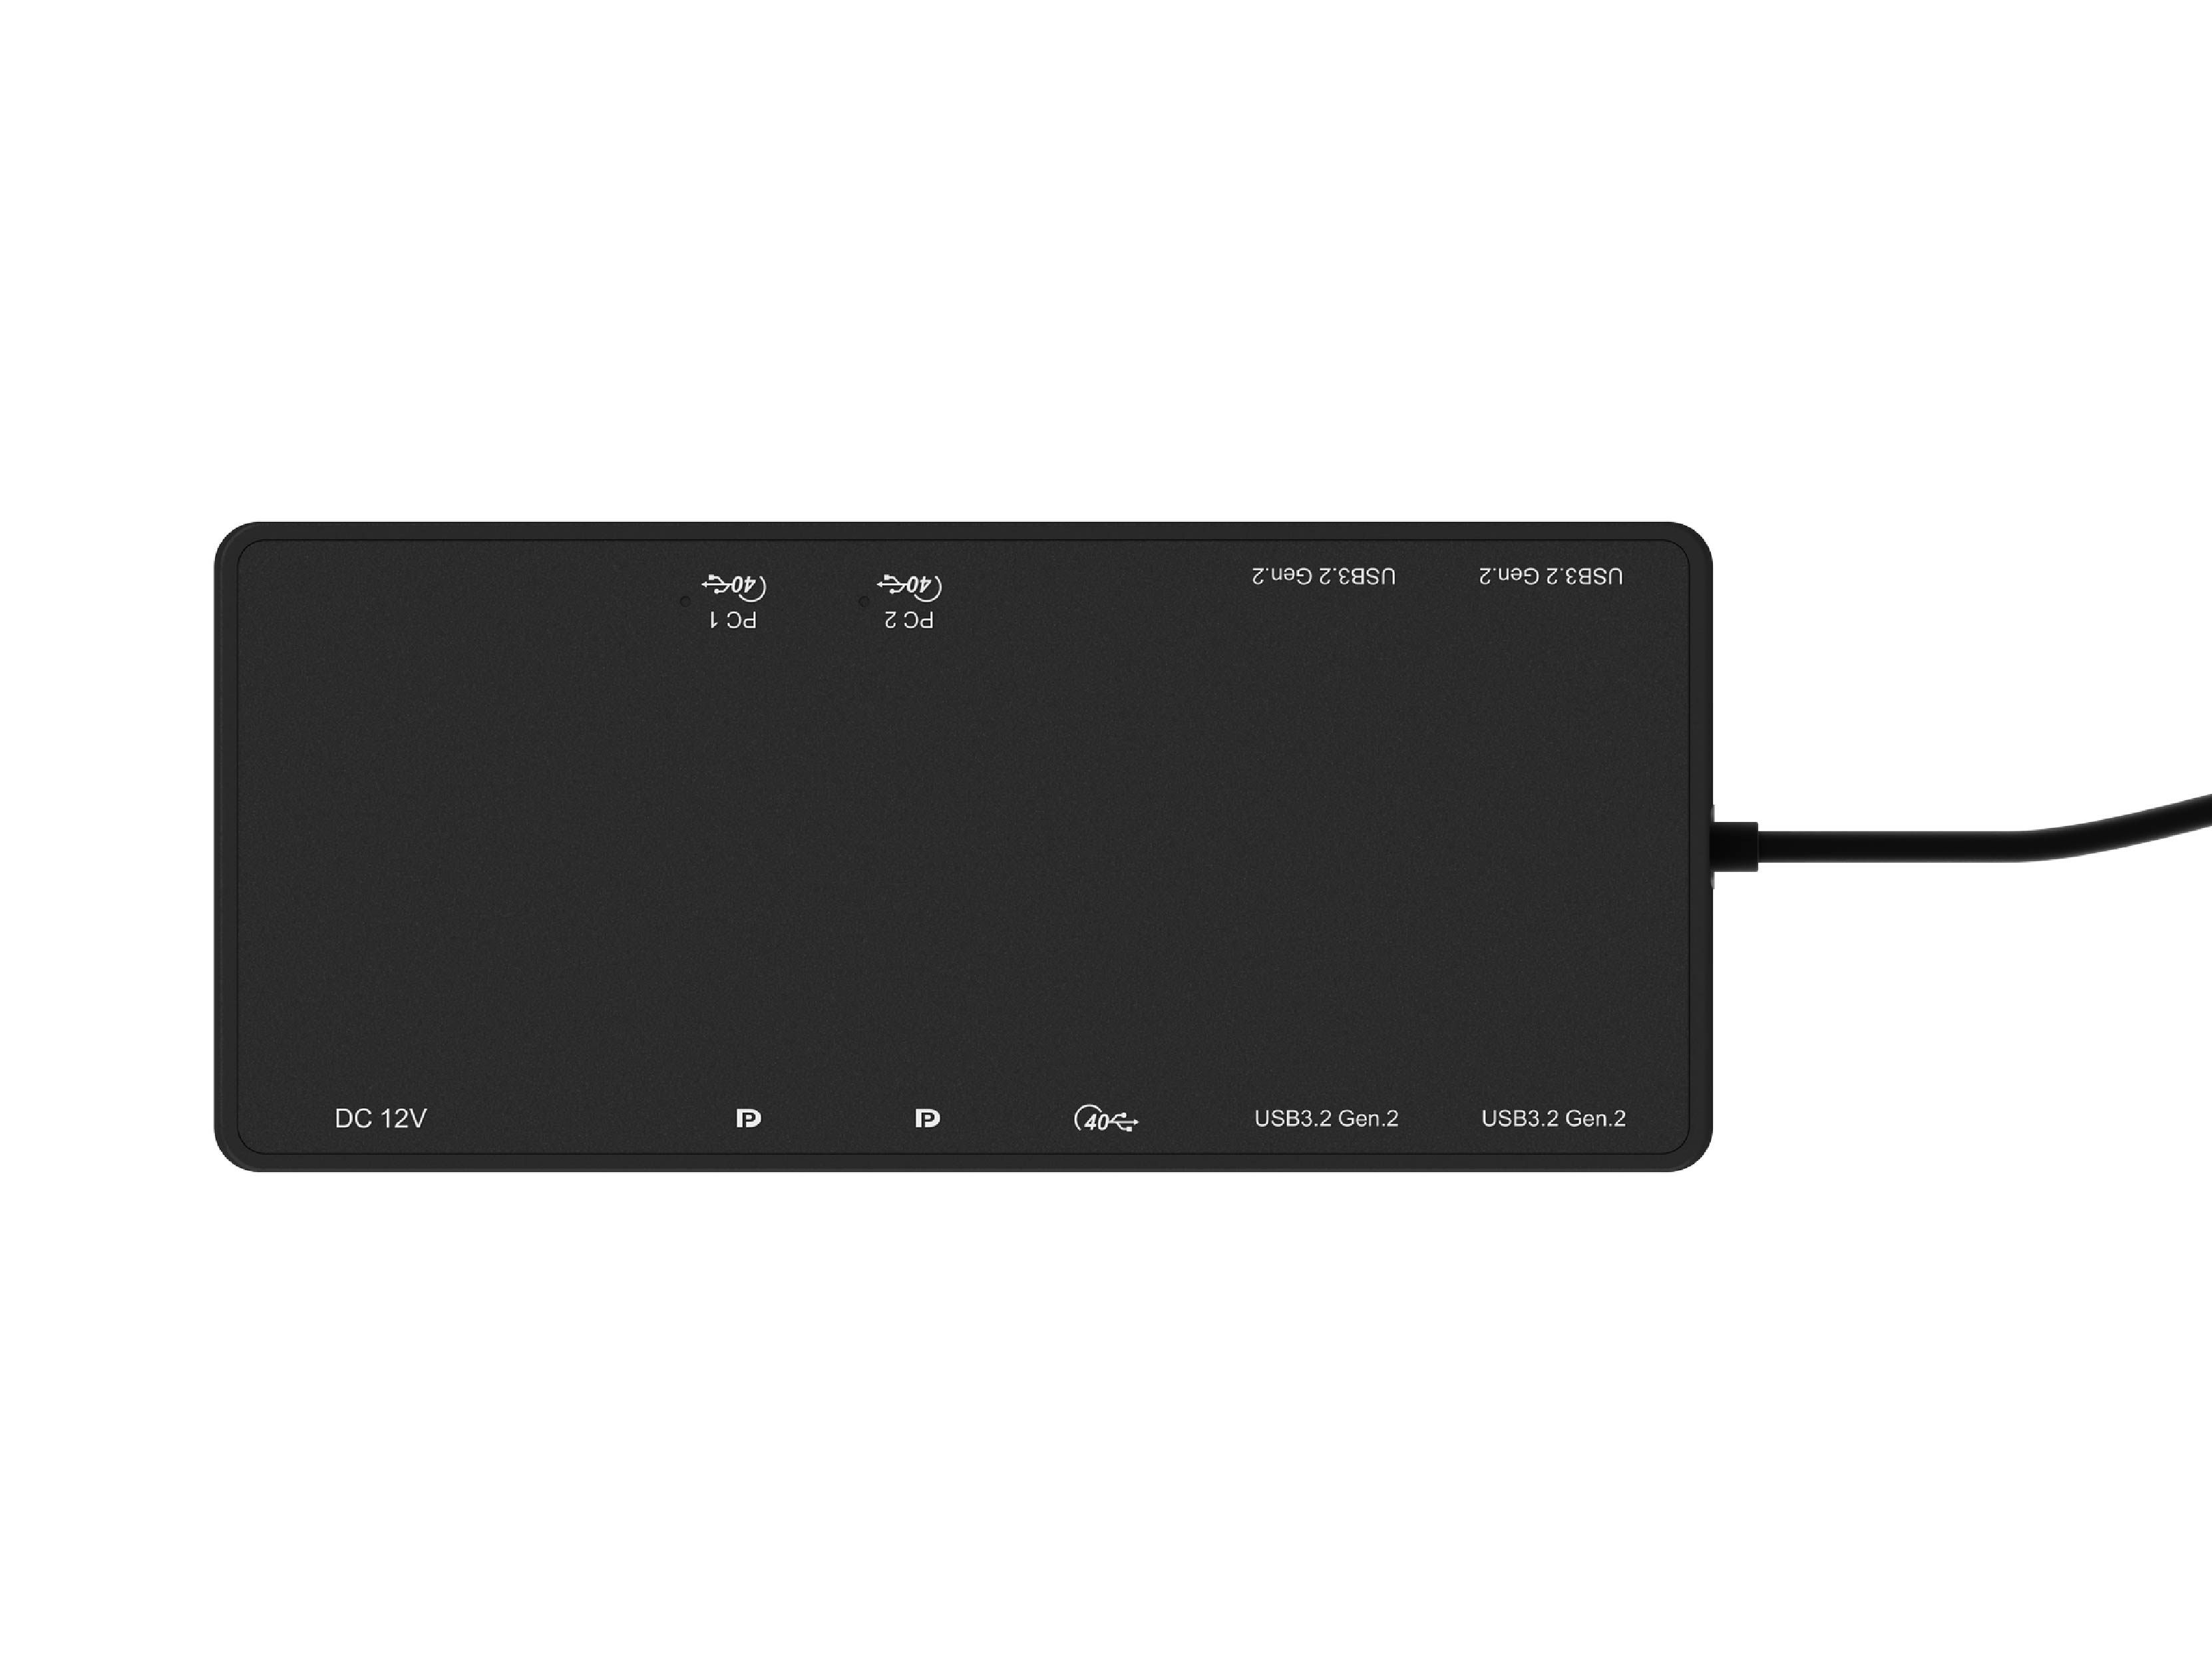 USB4 KVM Dock (SI-453US4), 2 to 2 KVM, supports 4K@60Hz output, USB4 USB-C supports 40Gbps to host, 4 x USB-A supports C1.2 (5V/2.4A) charge.